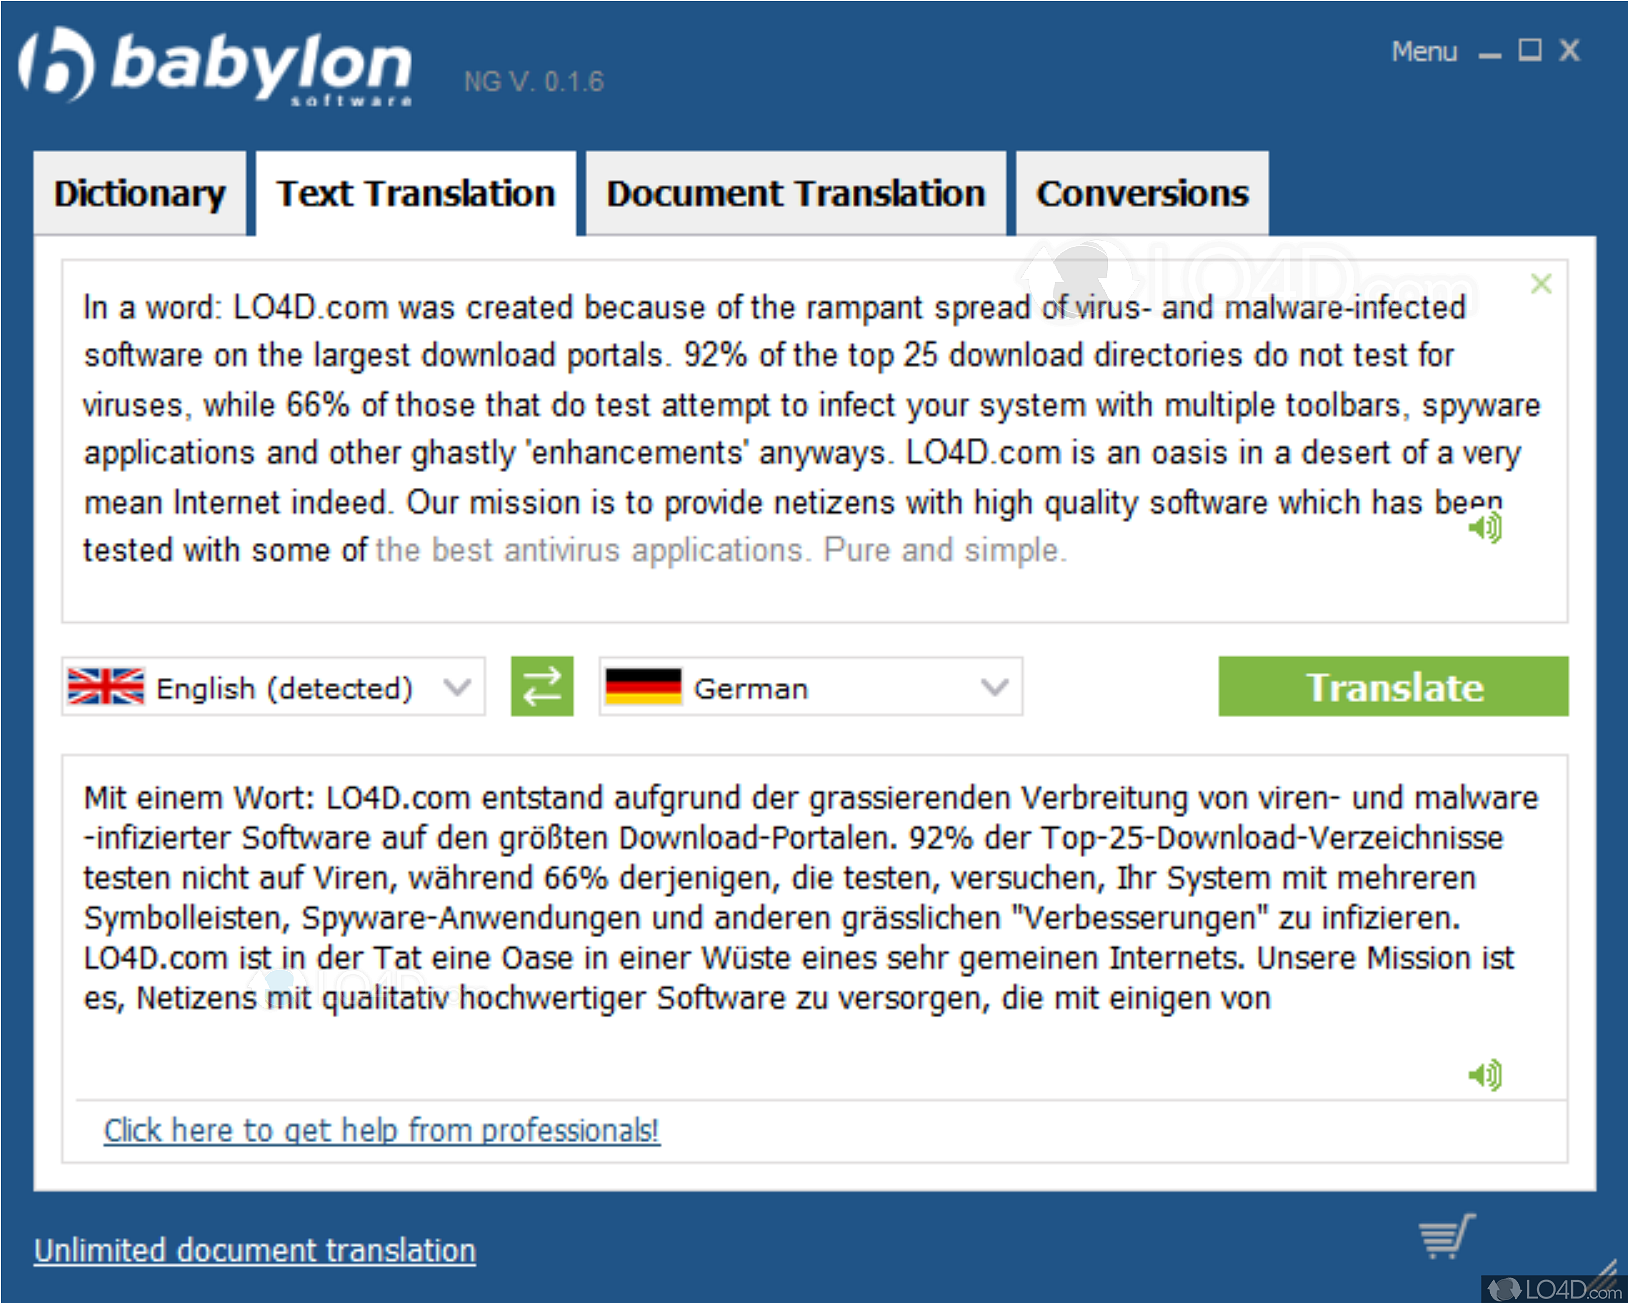 is babylon dictionary free